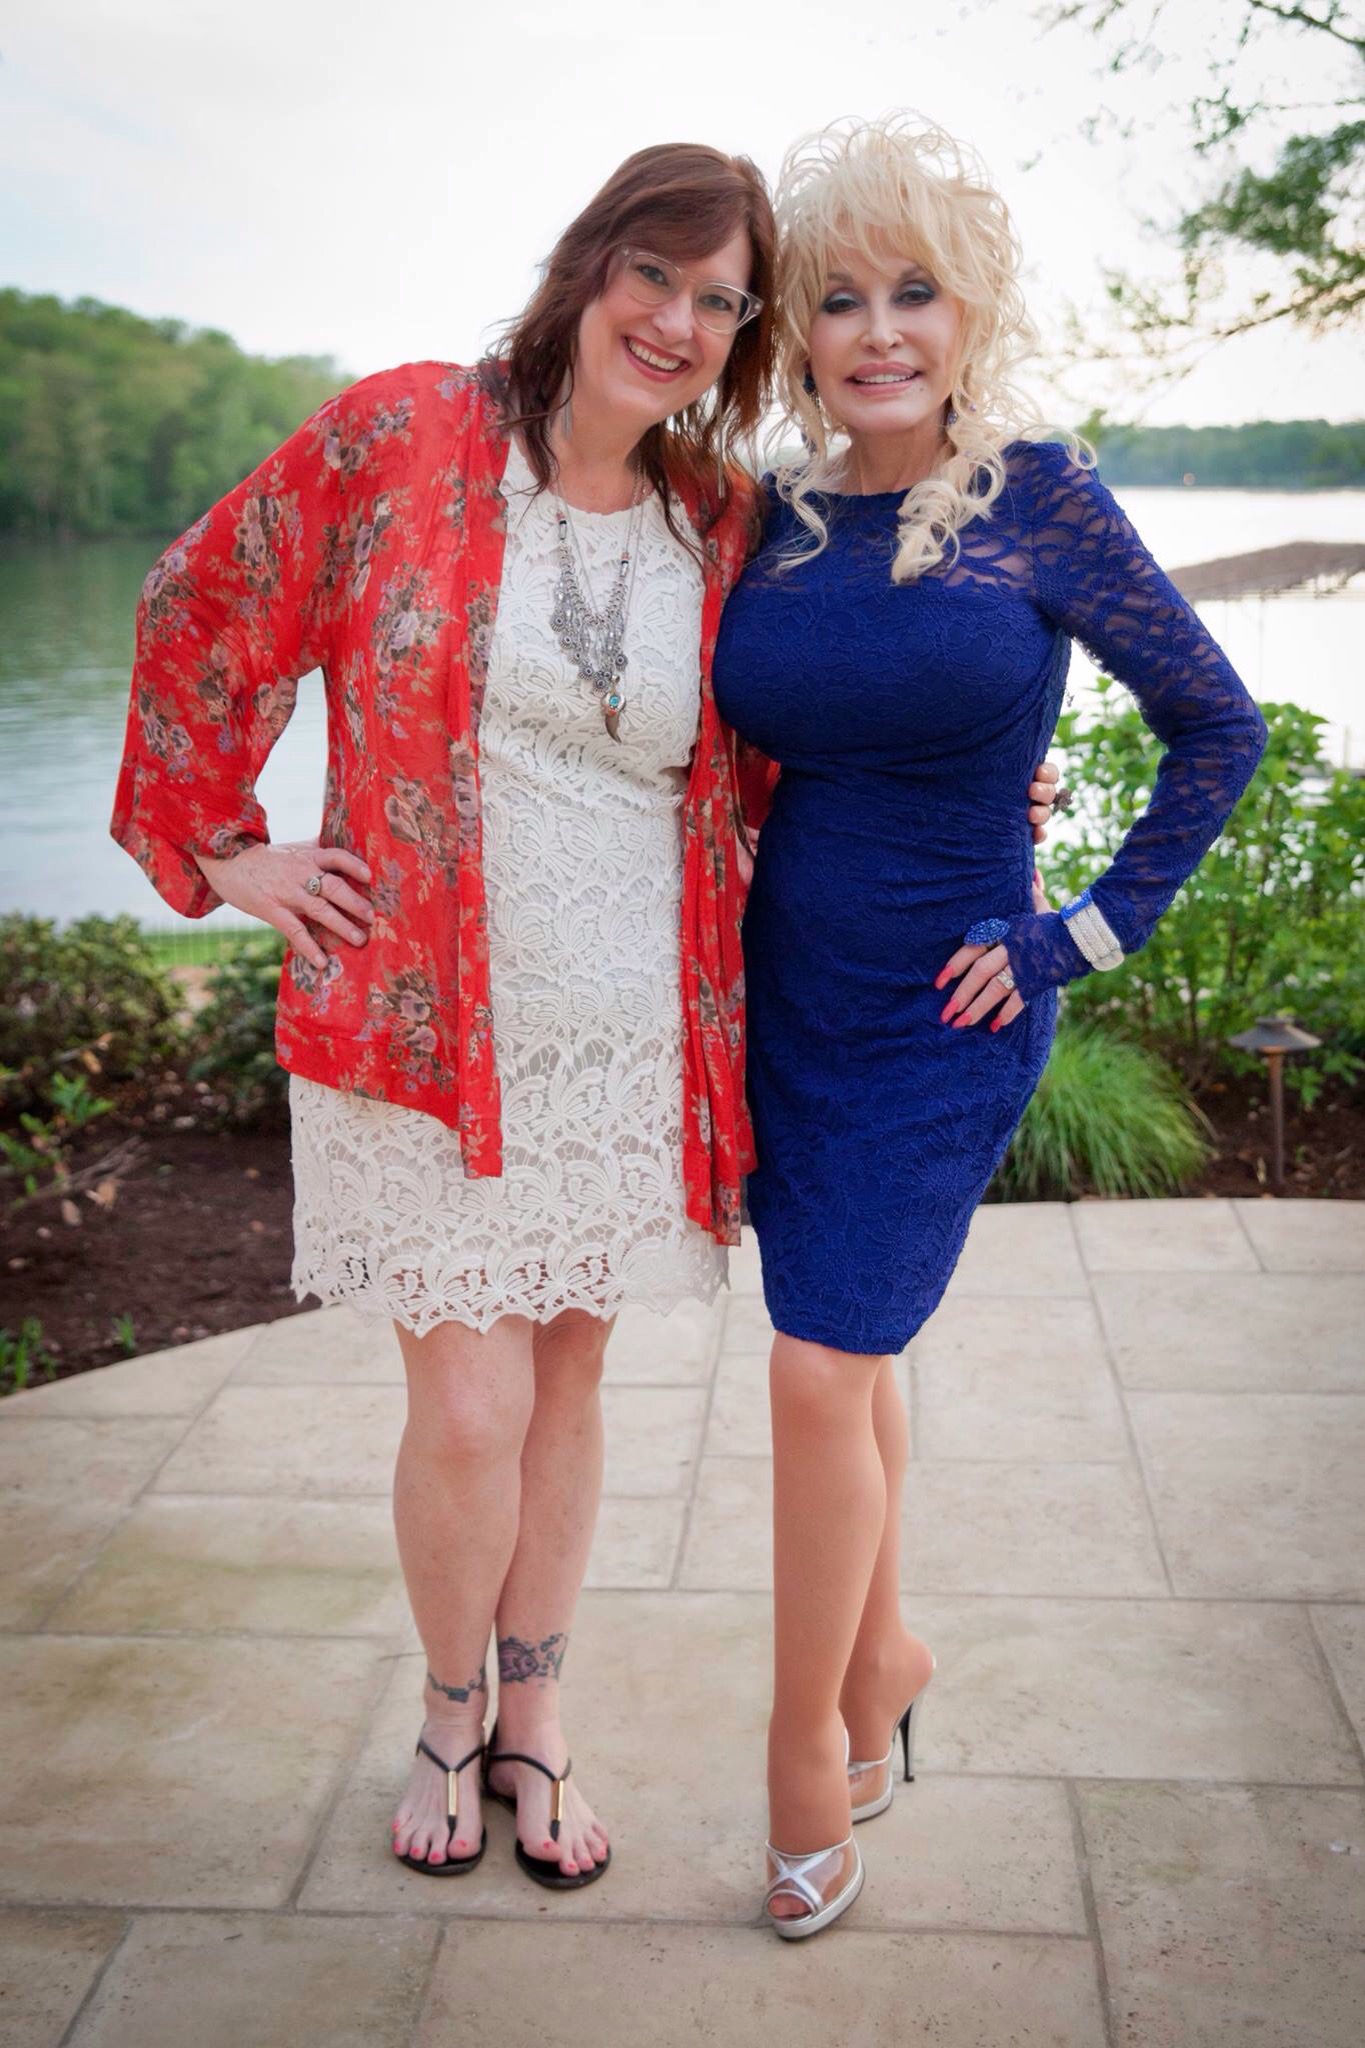 Stacie Huckabe met Dolly Parton in Nashville | Dollyfancom